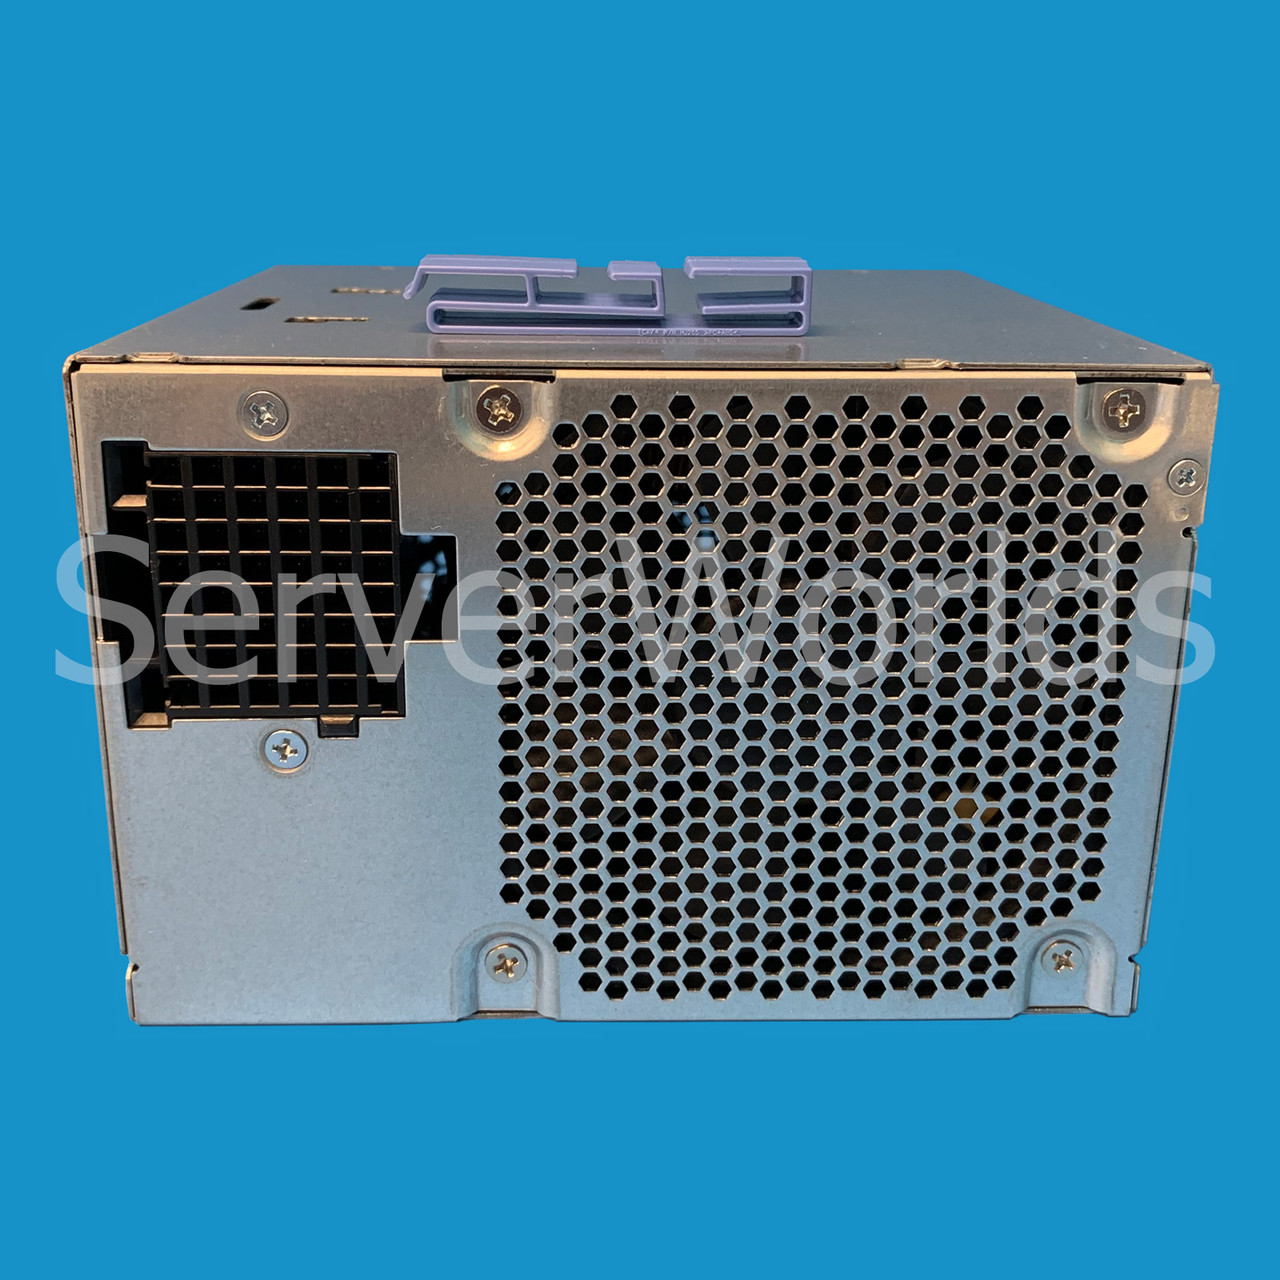 Dell YY922 Precision T3400 525W Power Supply NPS-525AB A